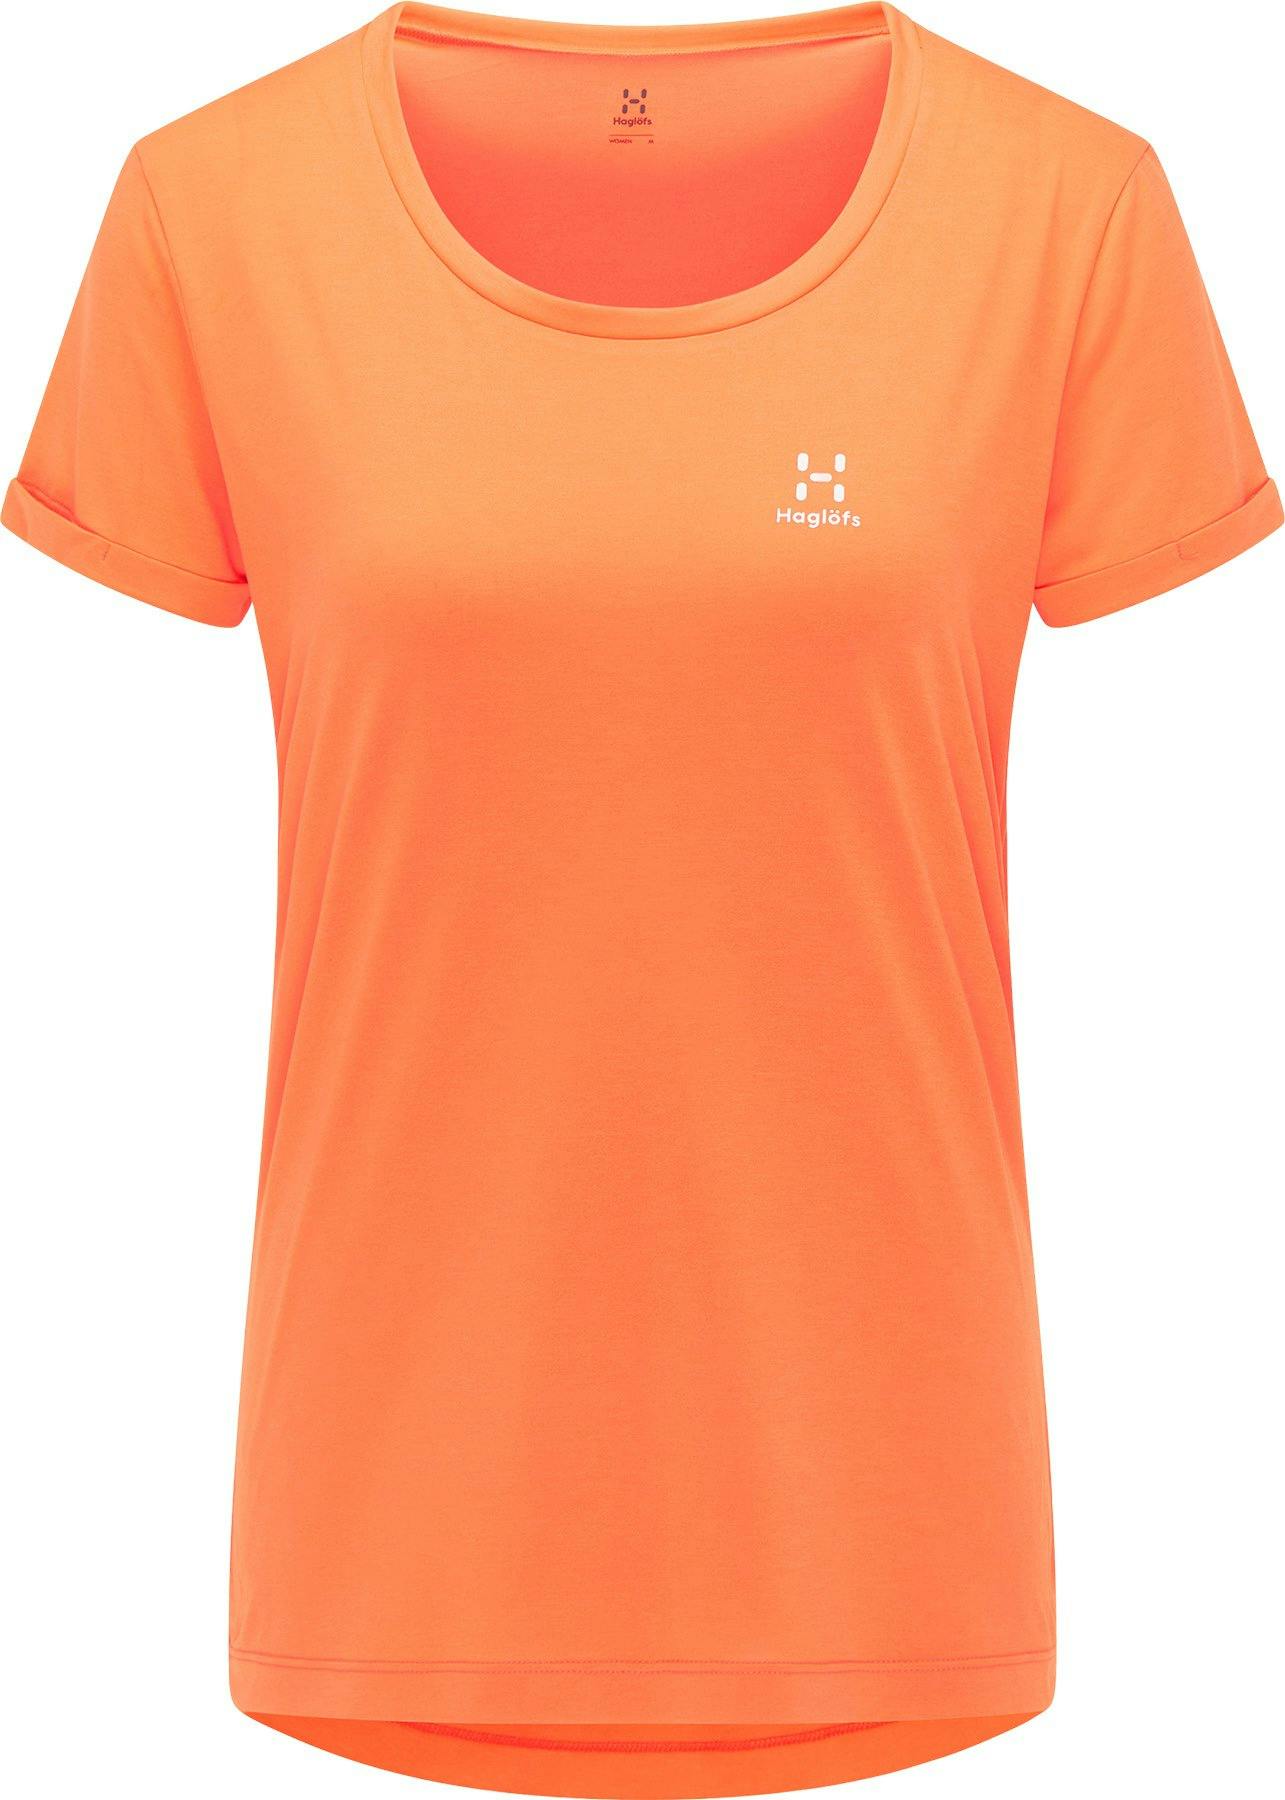 Product image for Ridge Hike T-Shirt - Women's